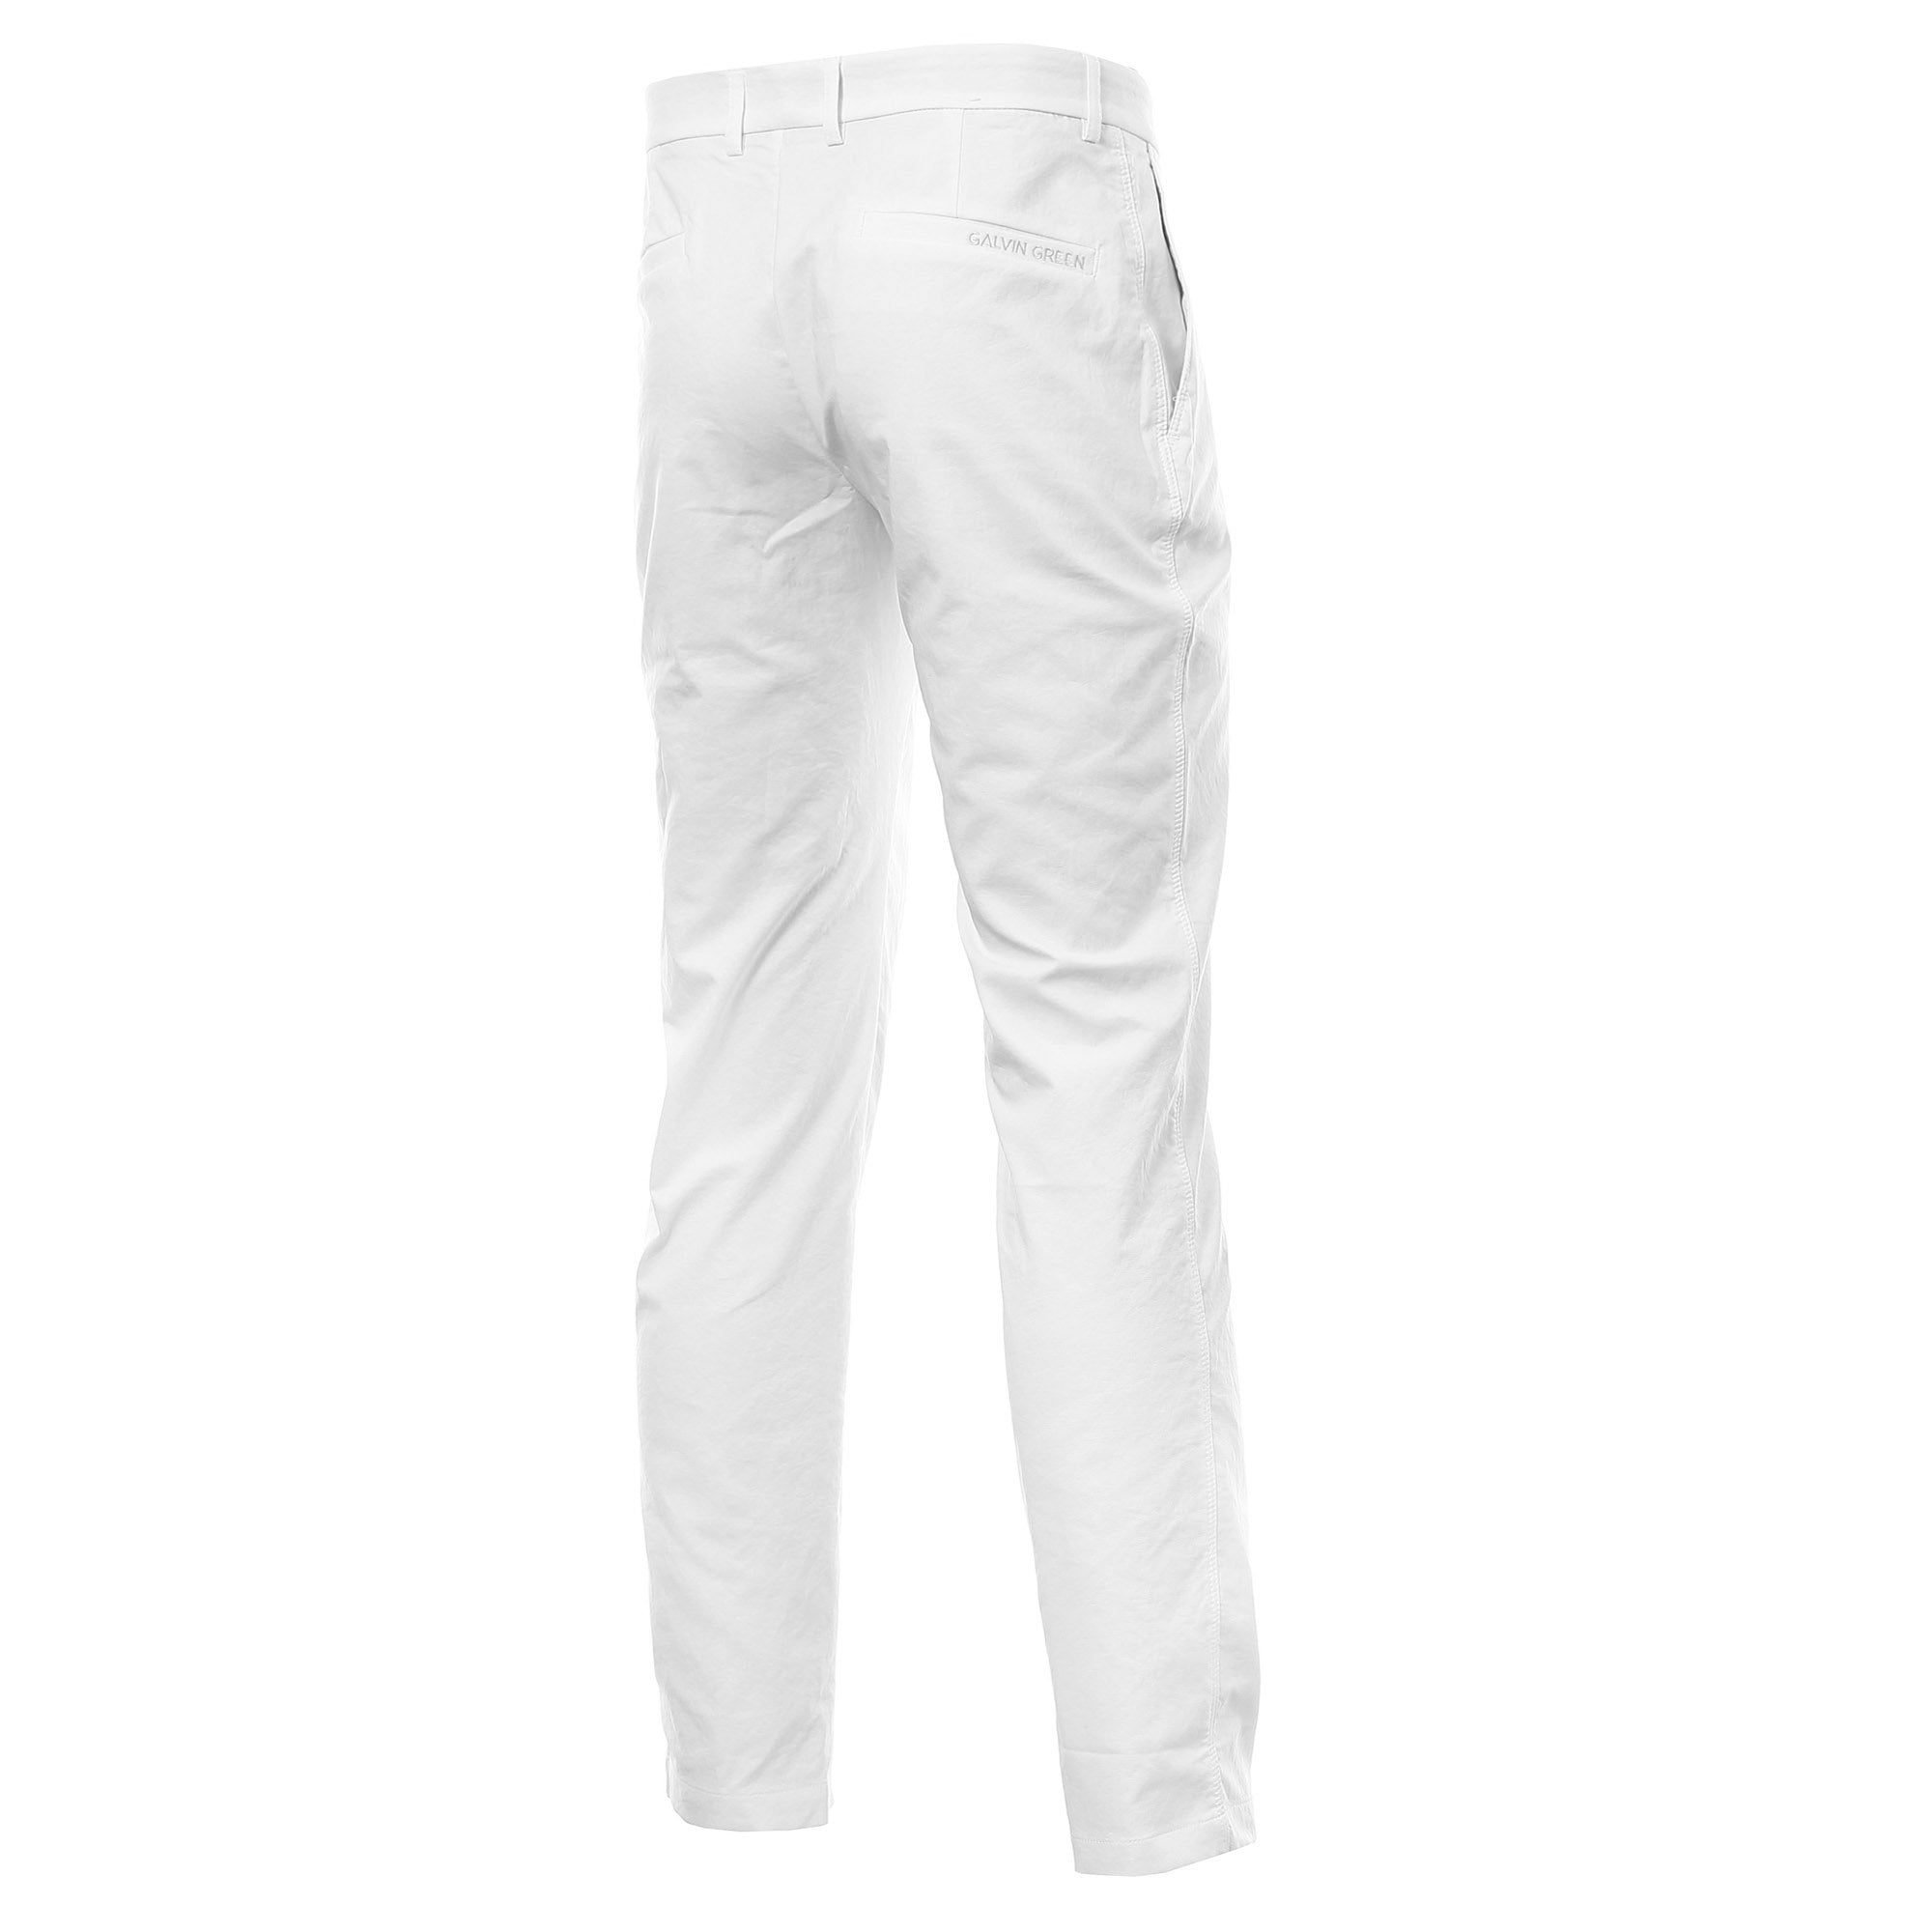 galvin-green-noah-ventil8-golf-trousers-white-9409